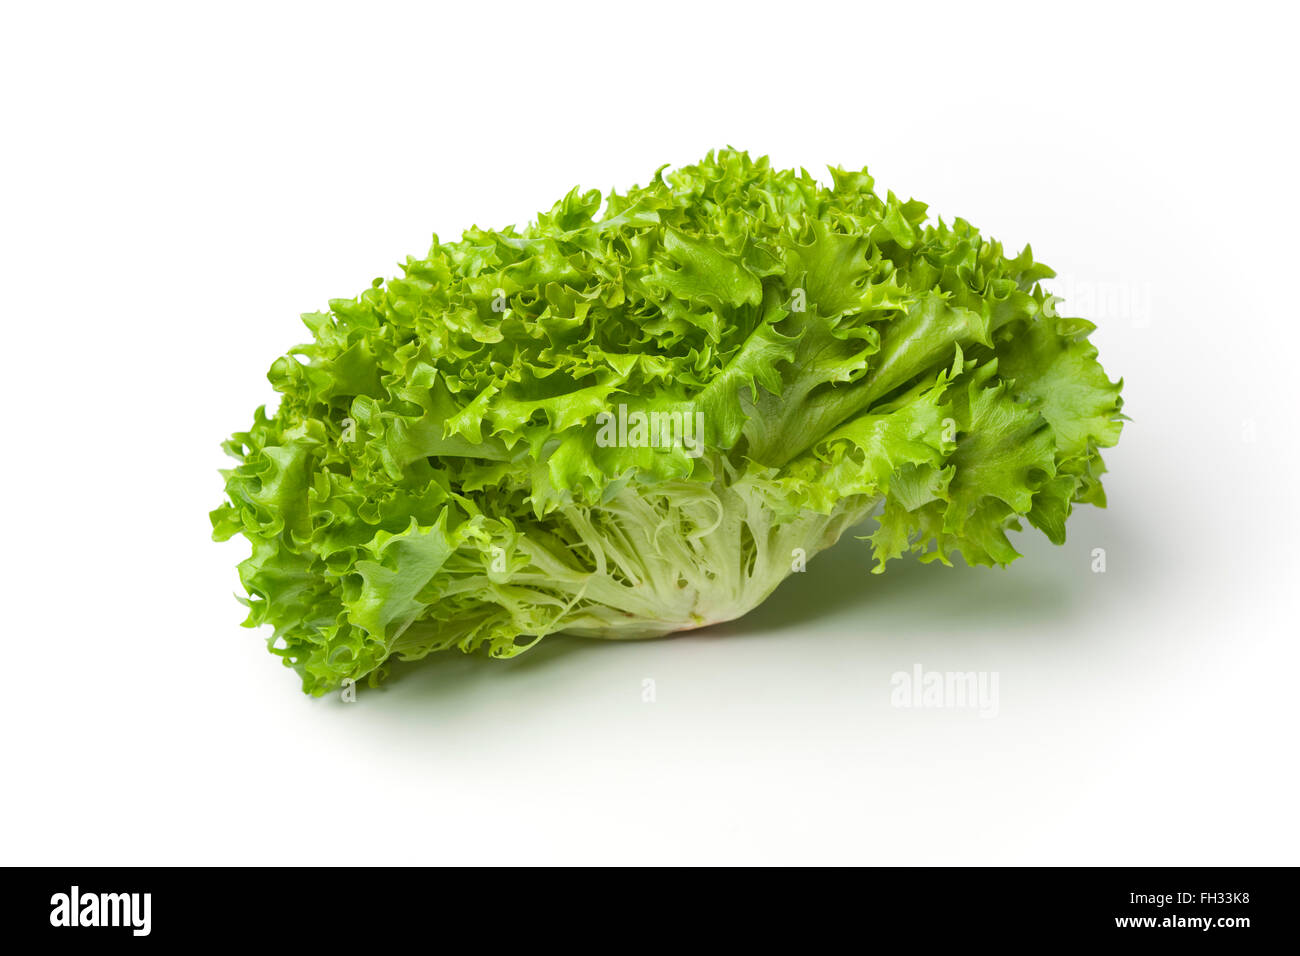 Fresh Lollo bionde lettuce isolated on white background Stock Photo